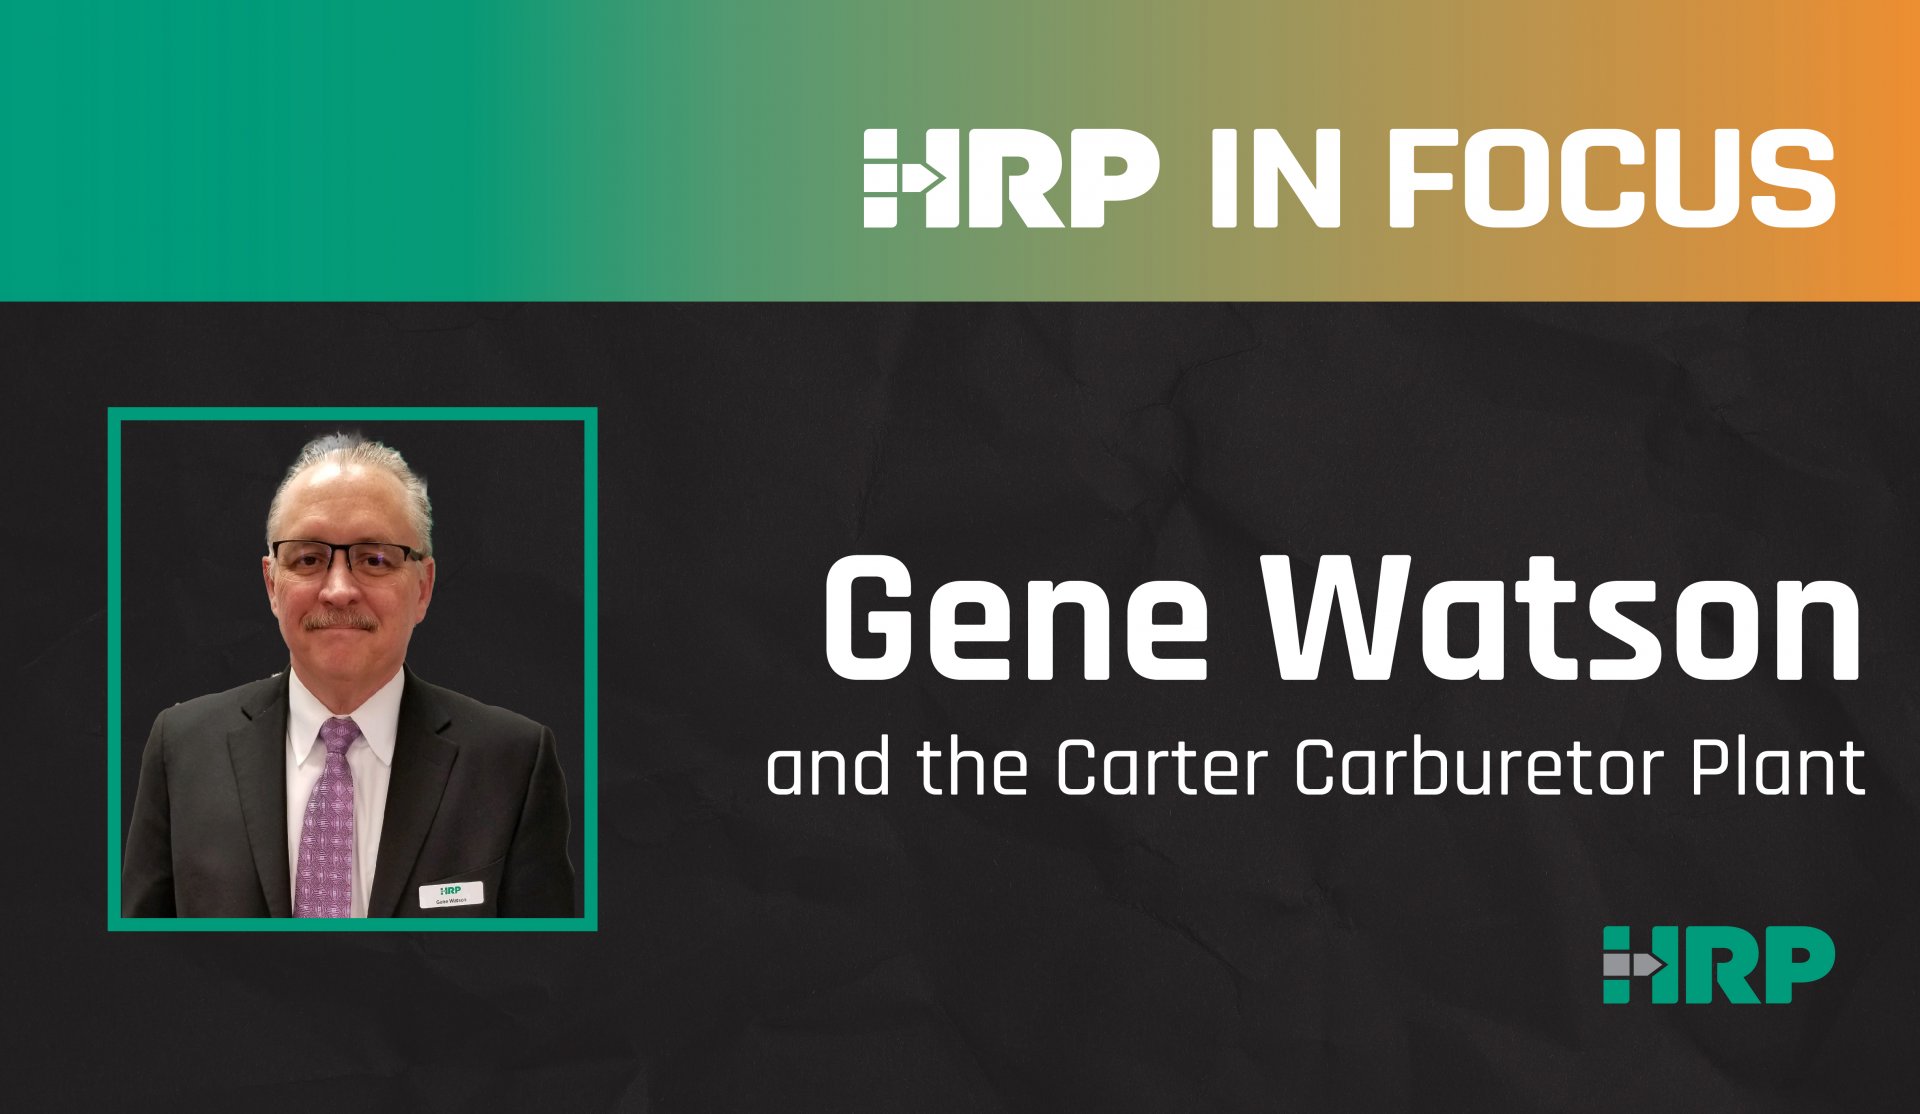 HRP in Focus: Gene Watson and the Carter Carburetor Plant